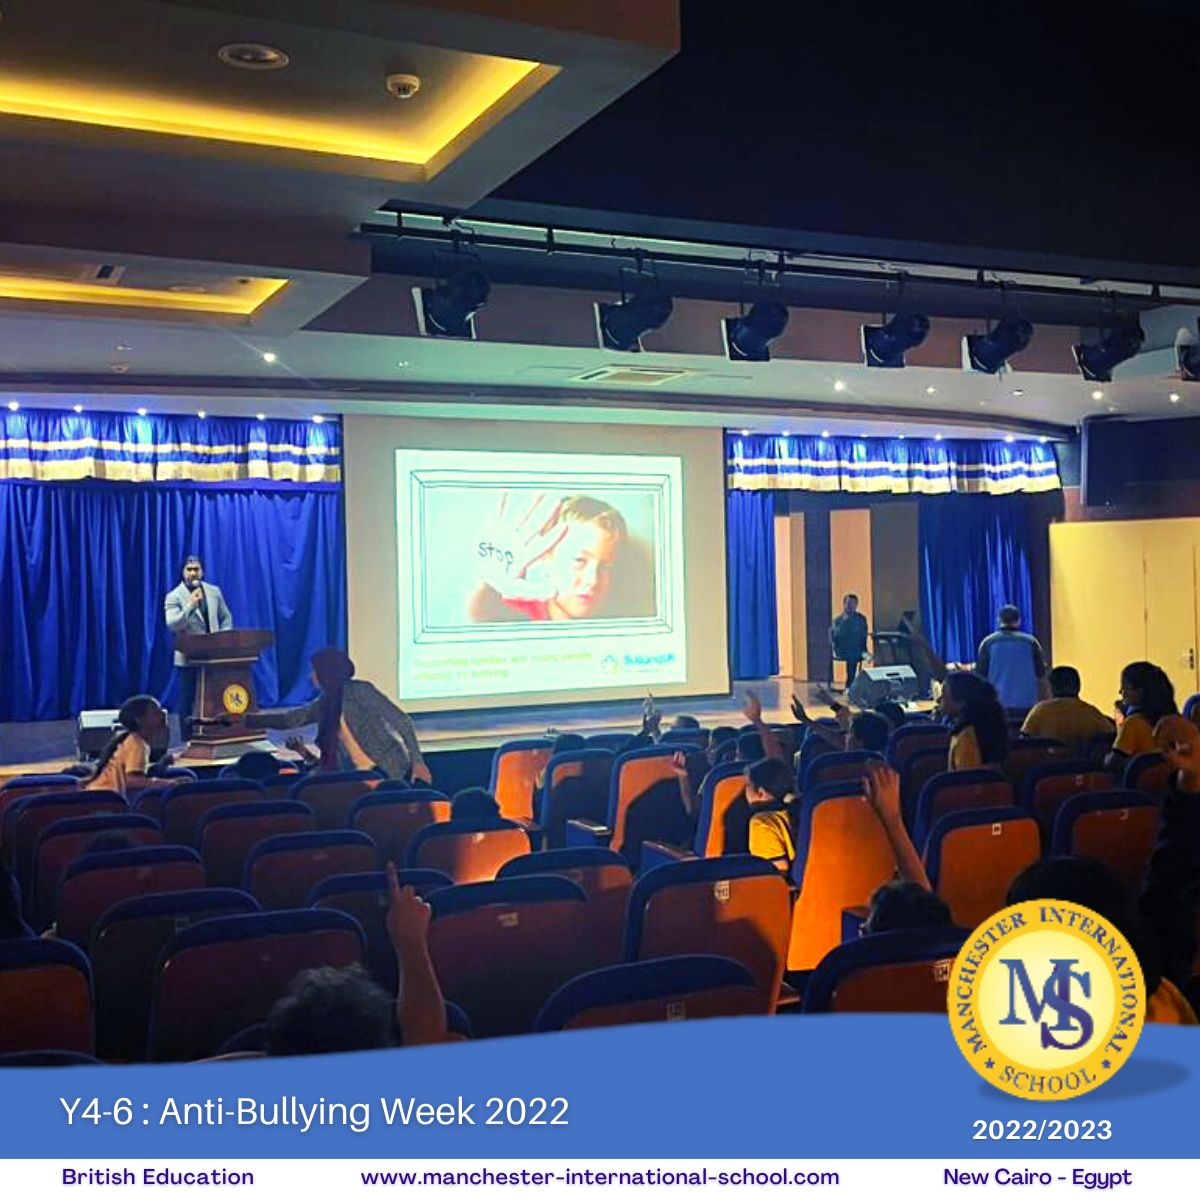 Y4-6 : Anti-Bullying Week